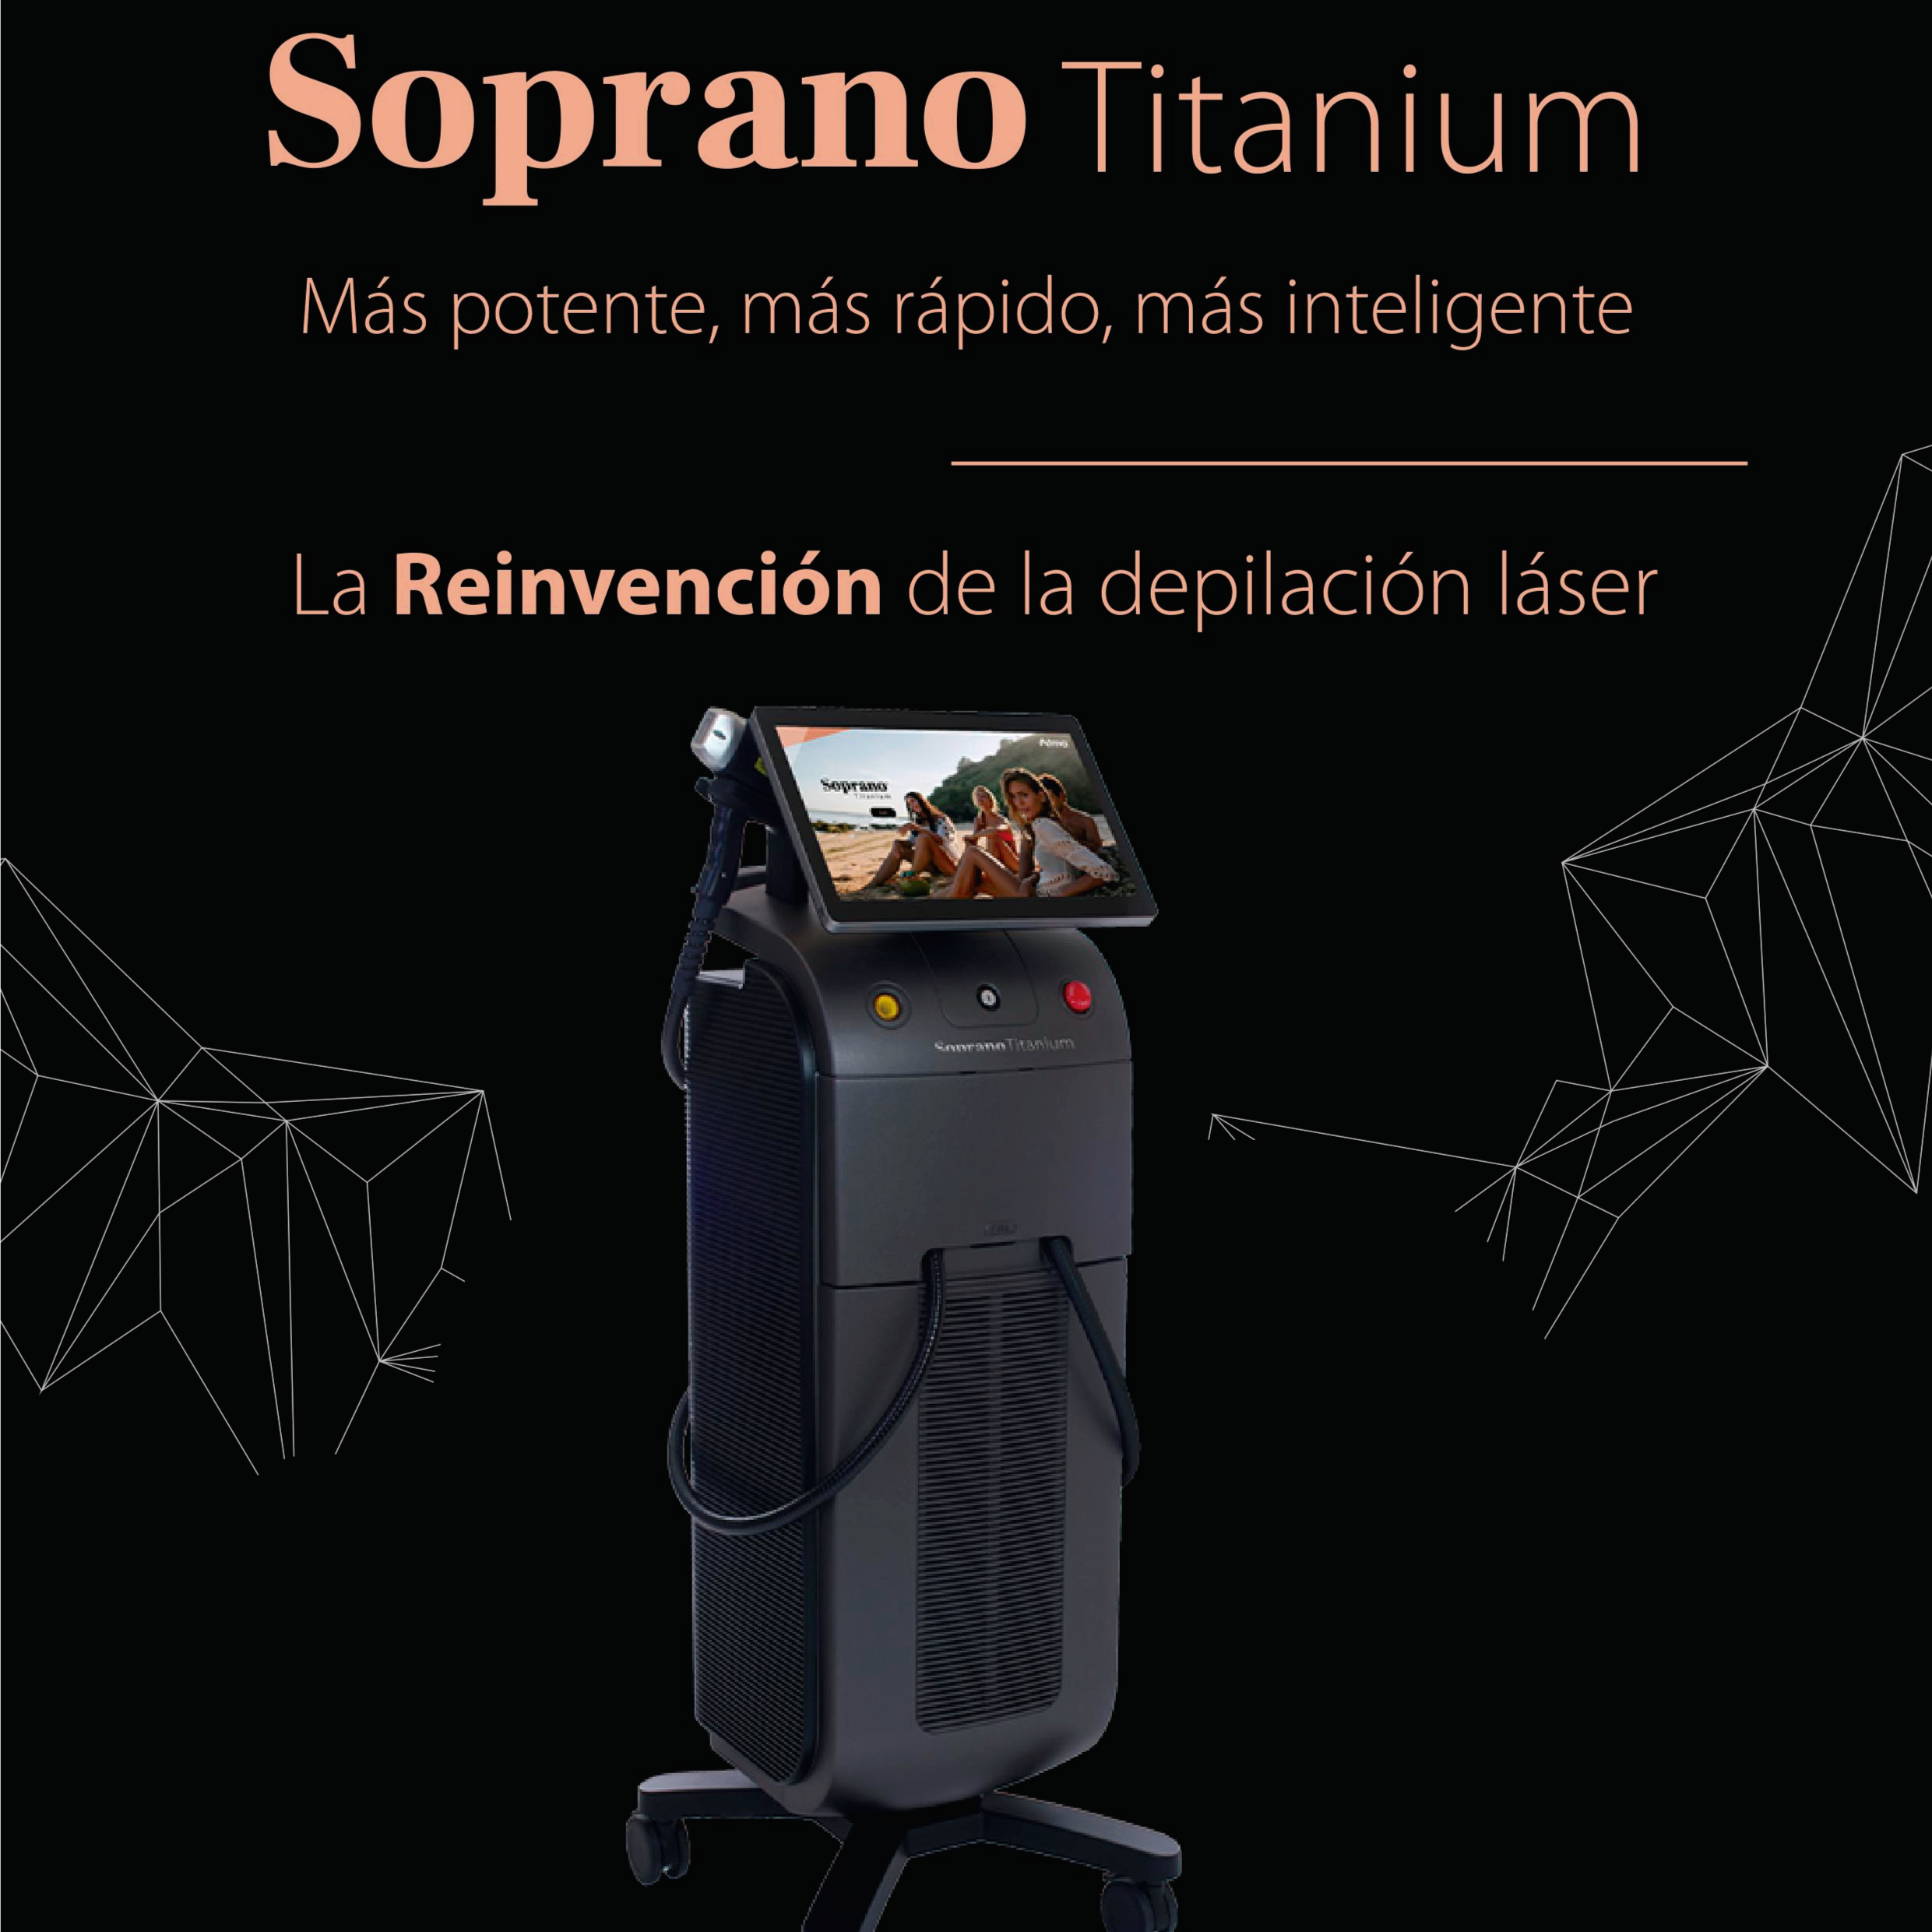 Soprano Titanium Depilación Láser